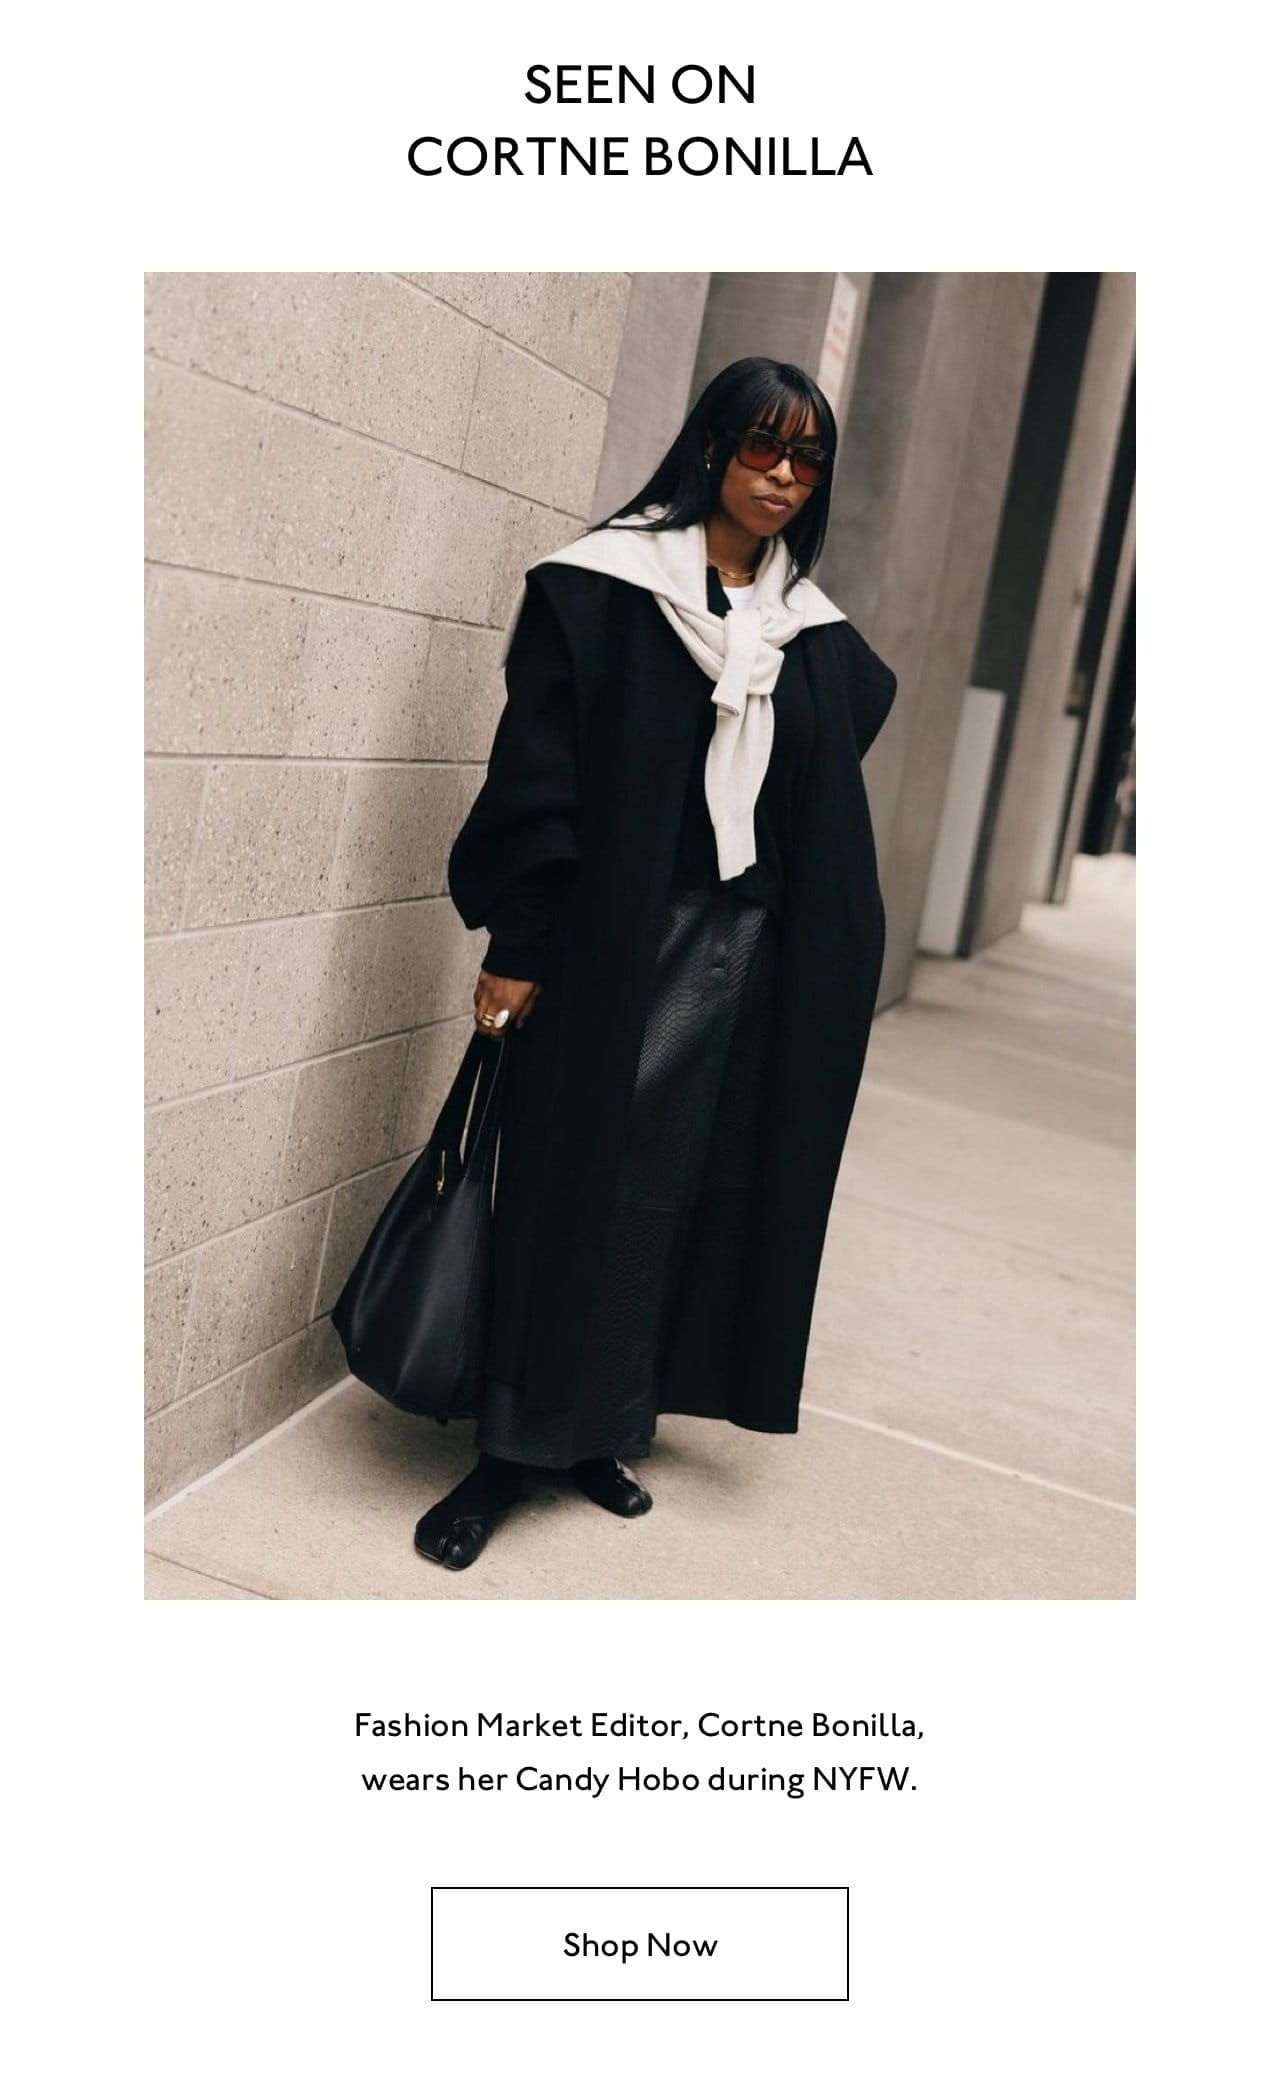 Seen on Cortne Bonilla, Fashion Market Editor: Candy Hobo in Black during New York Fashion Week.